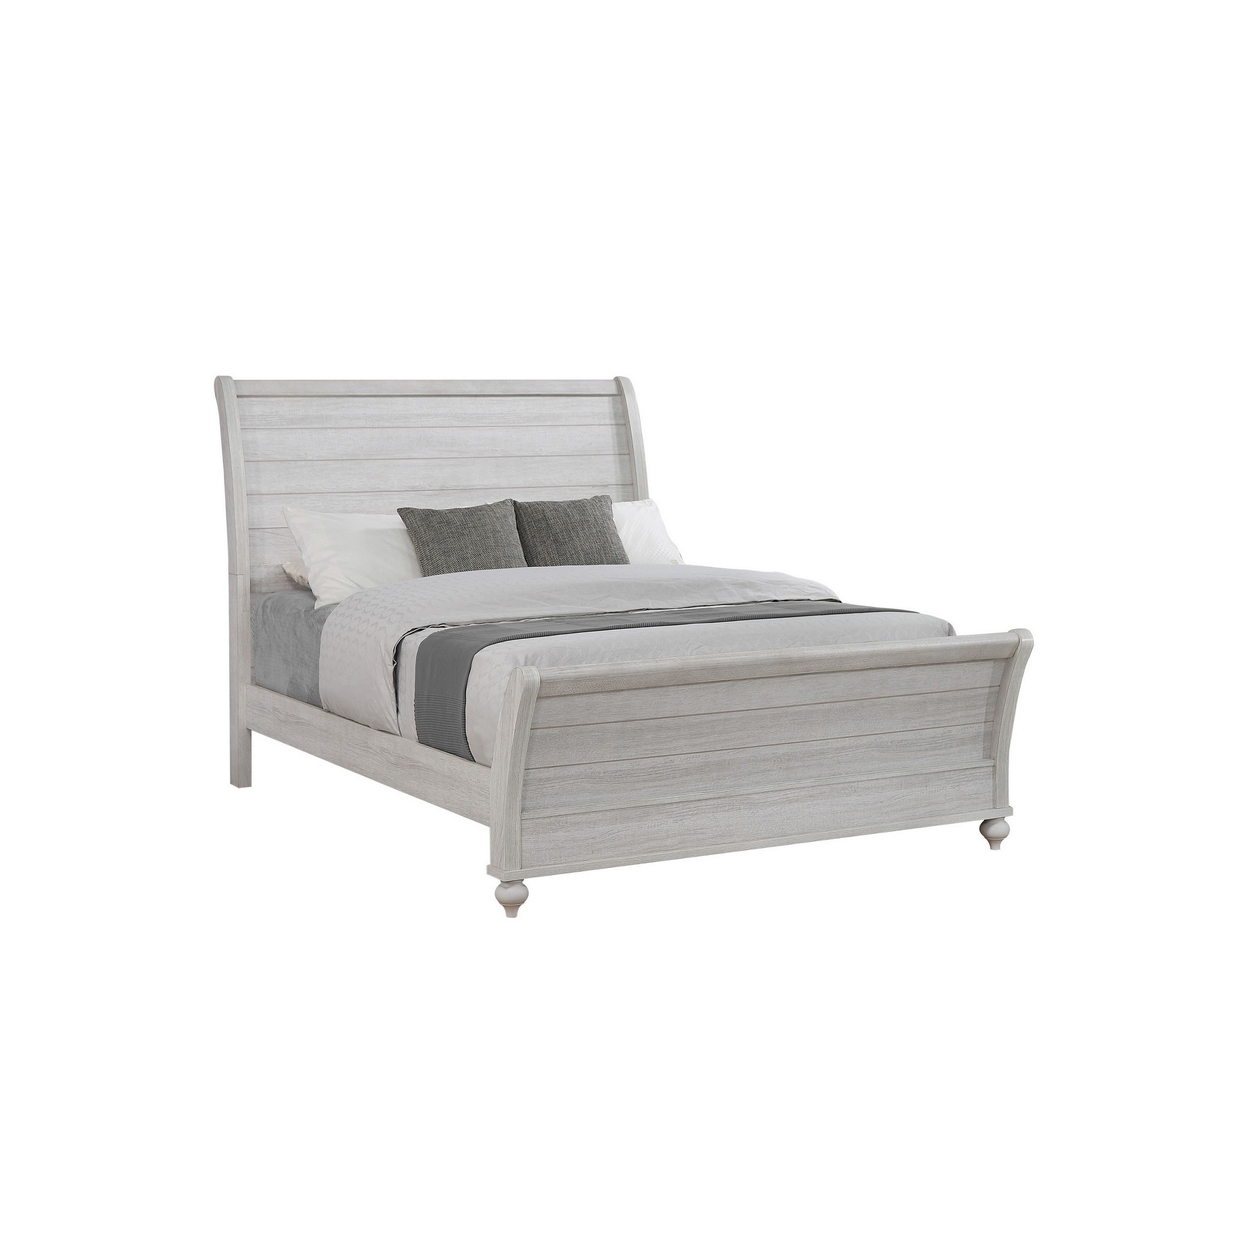 Amor King Size Bed, Planked Curved Sleigh Design, Vintage Gray Finish- Saltoro Sherpi